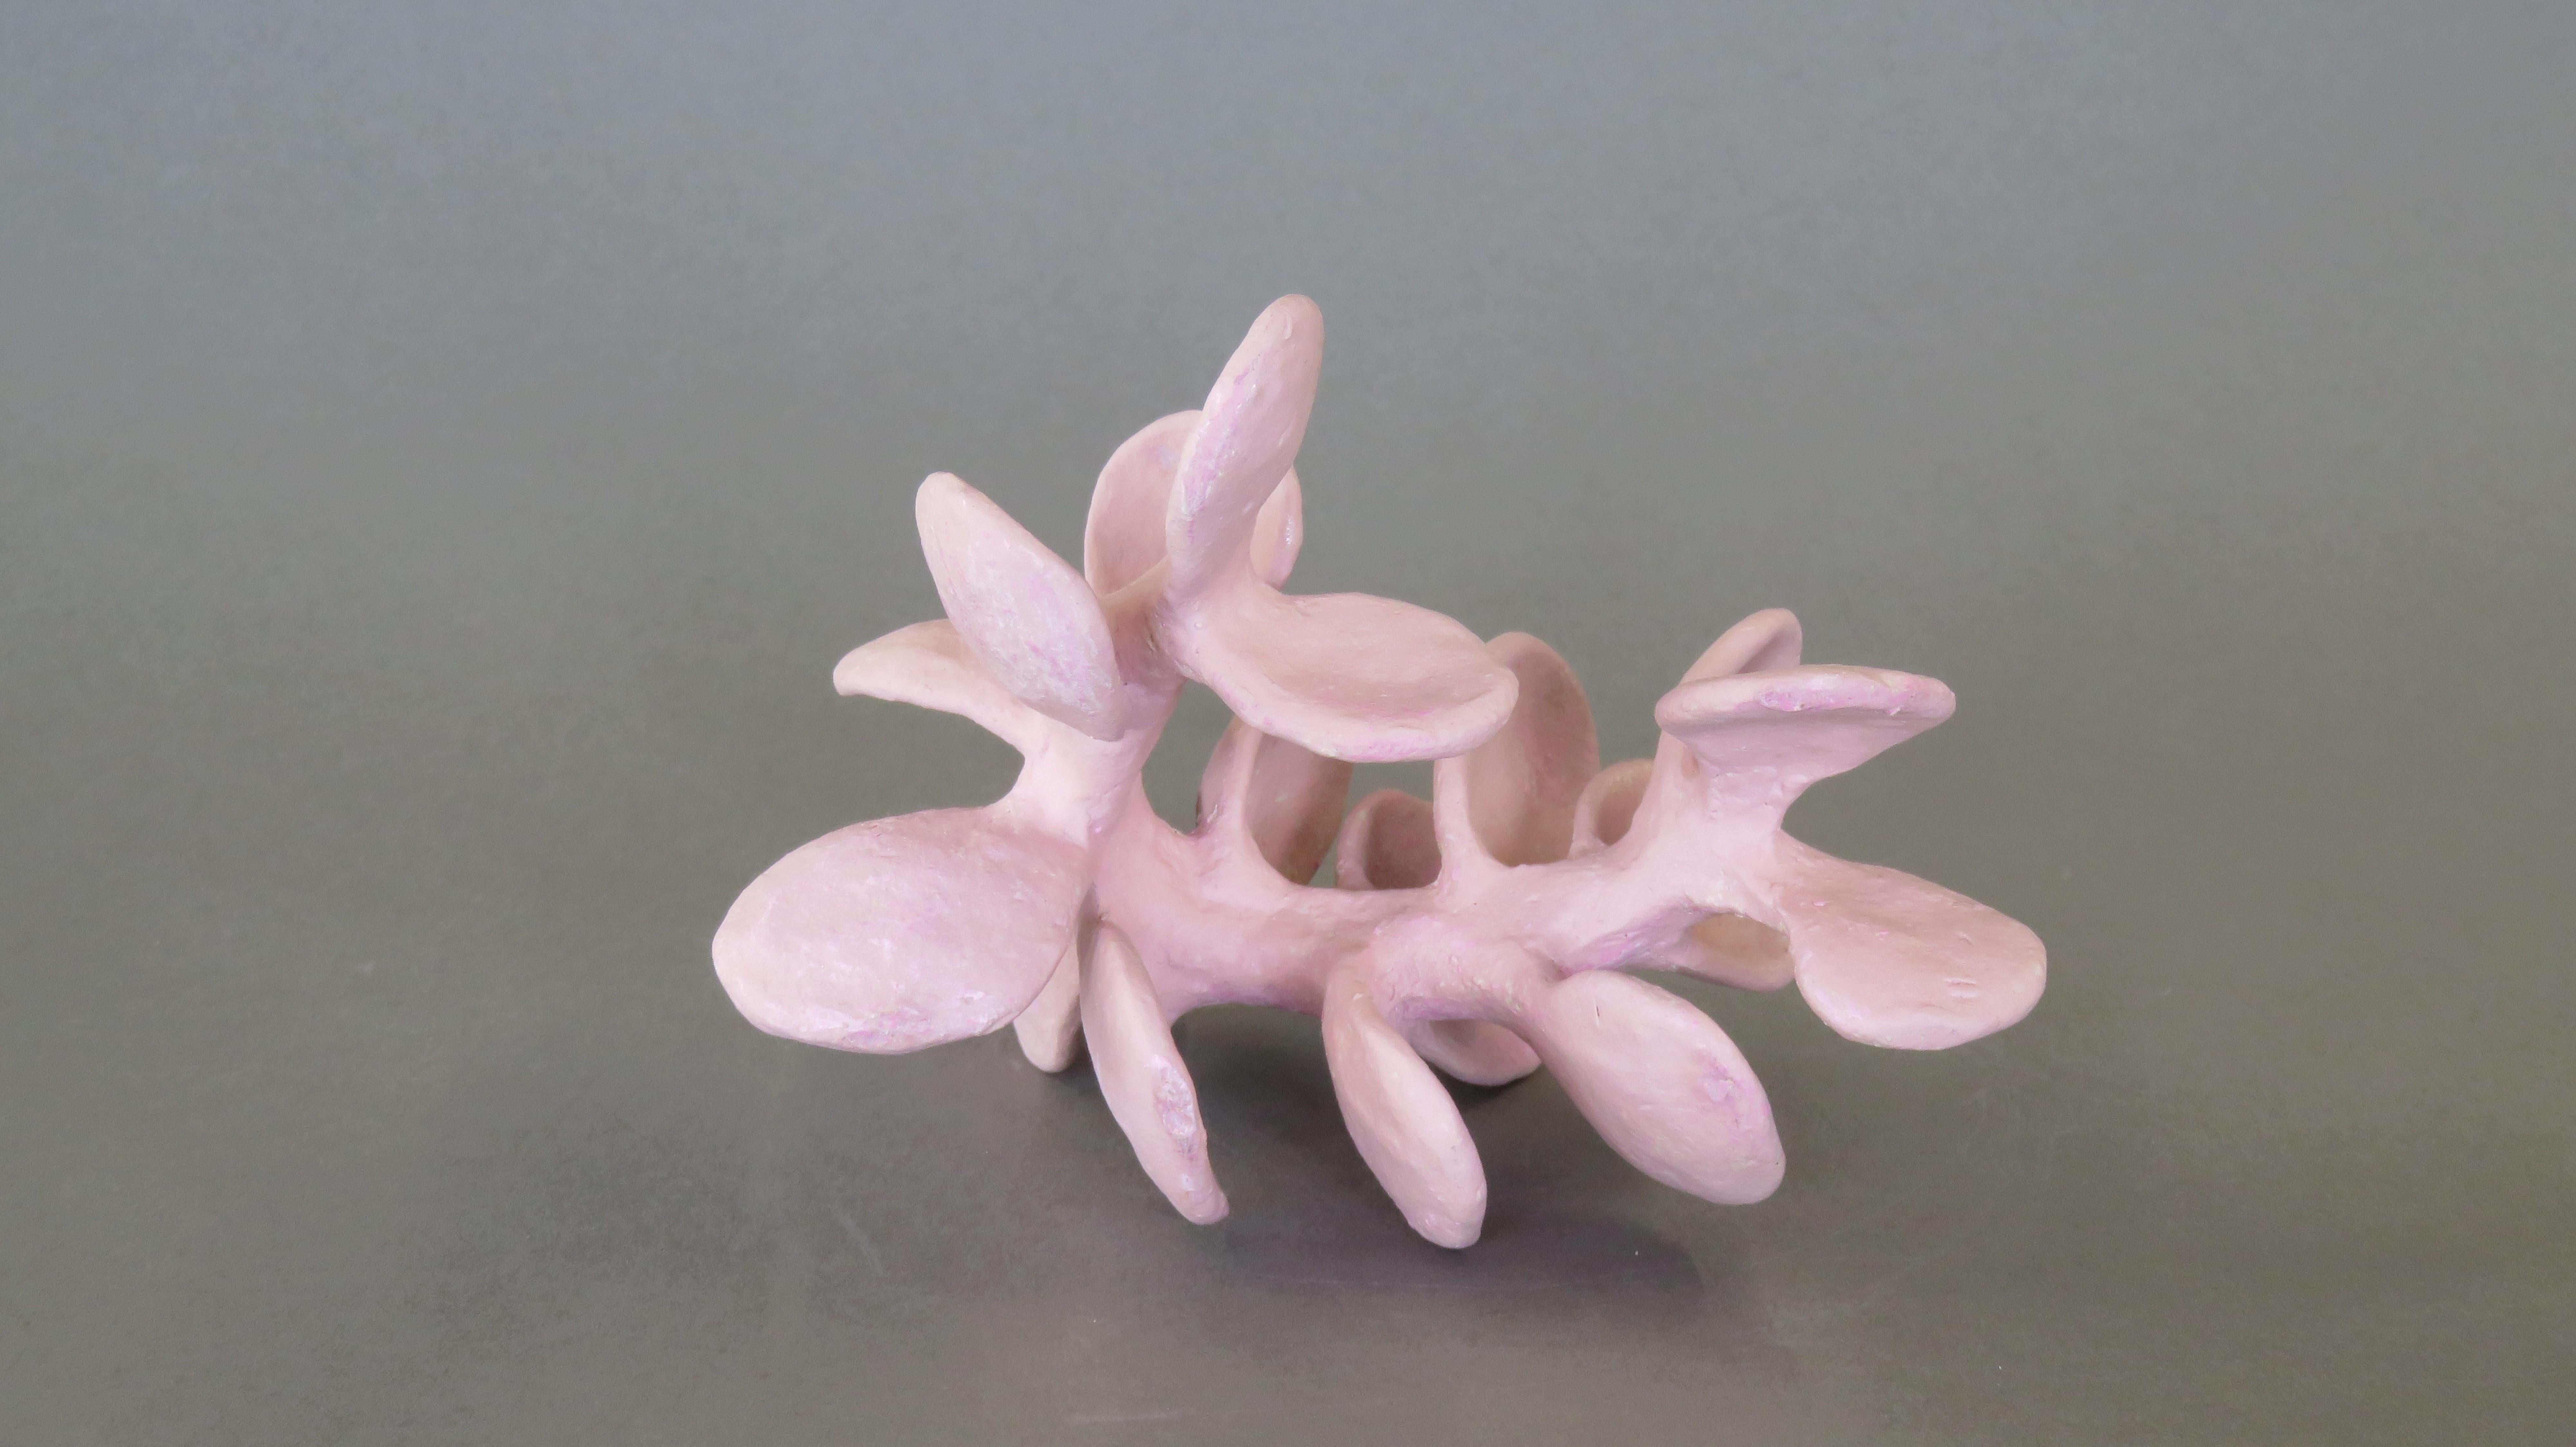 Fired Handbuilt Ceramic Sculpture in Pink, A Flower-Like Vertebrae With Petals